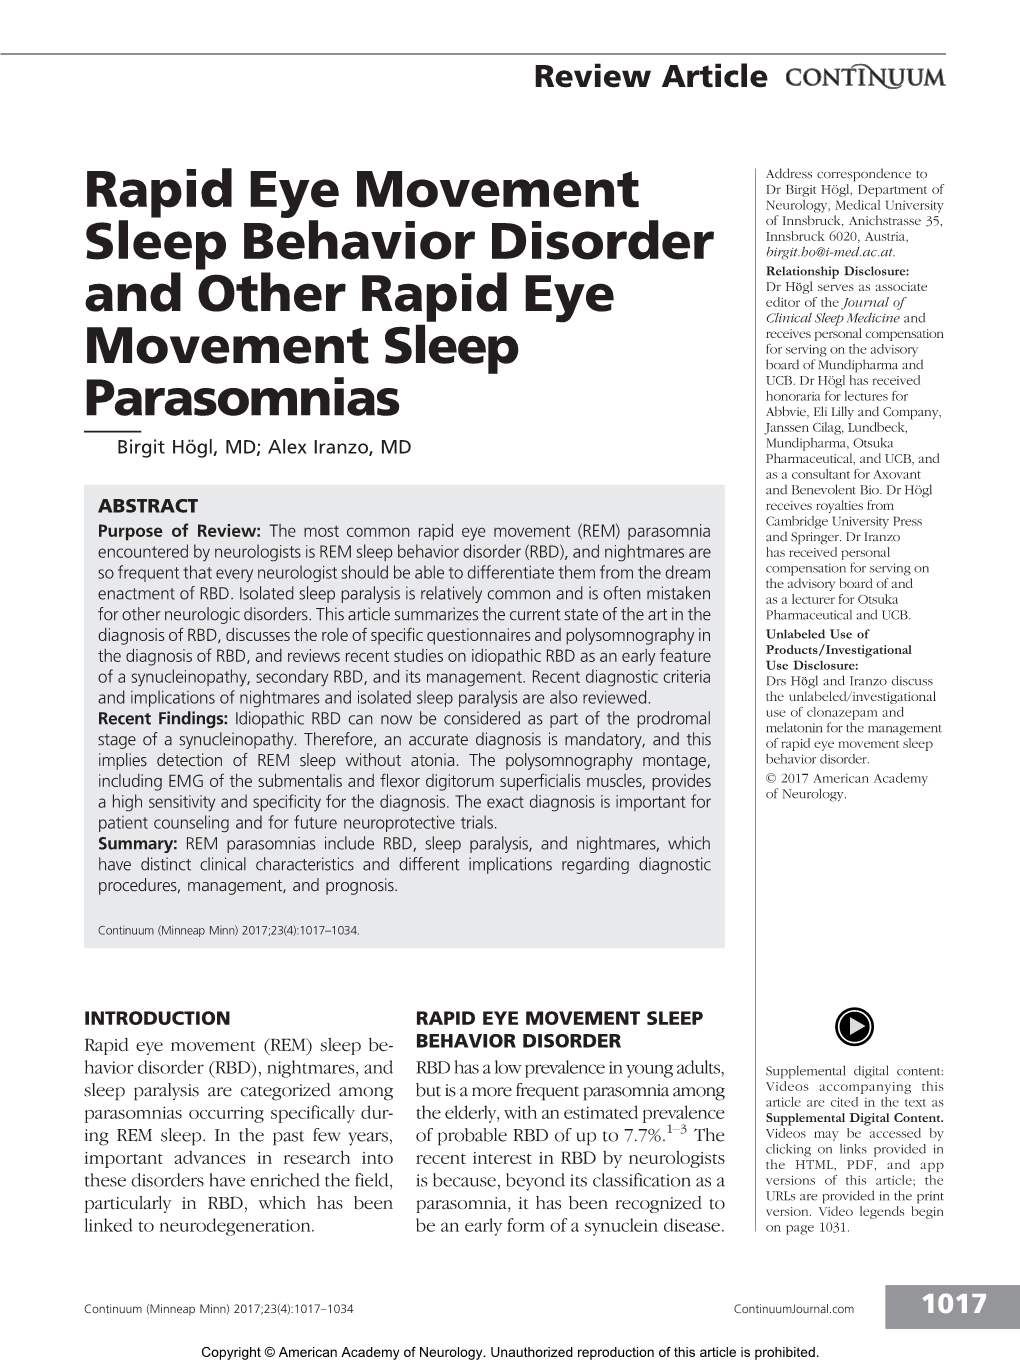 REM Sleep Behavior Disorder